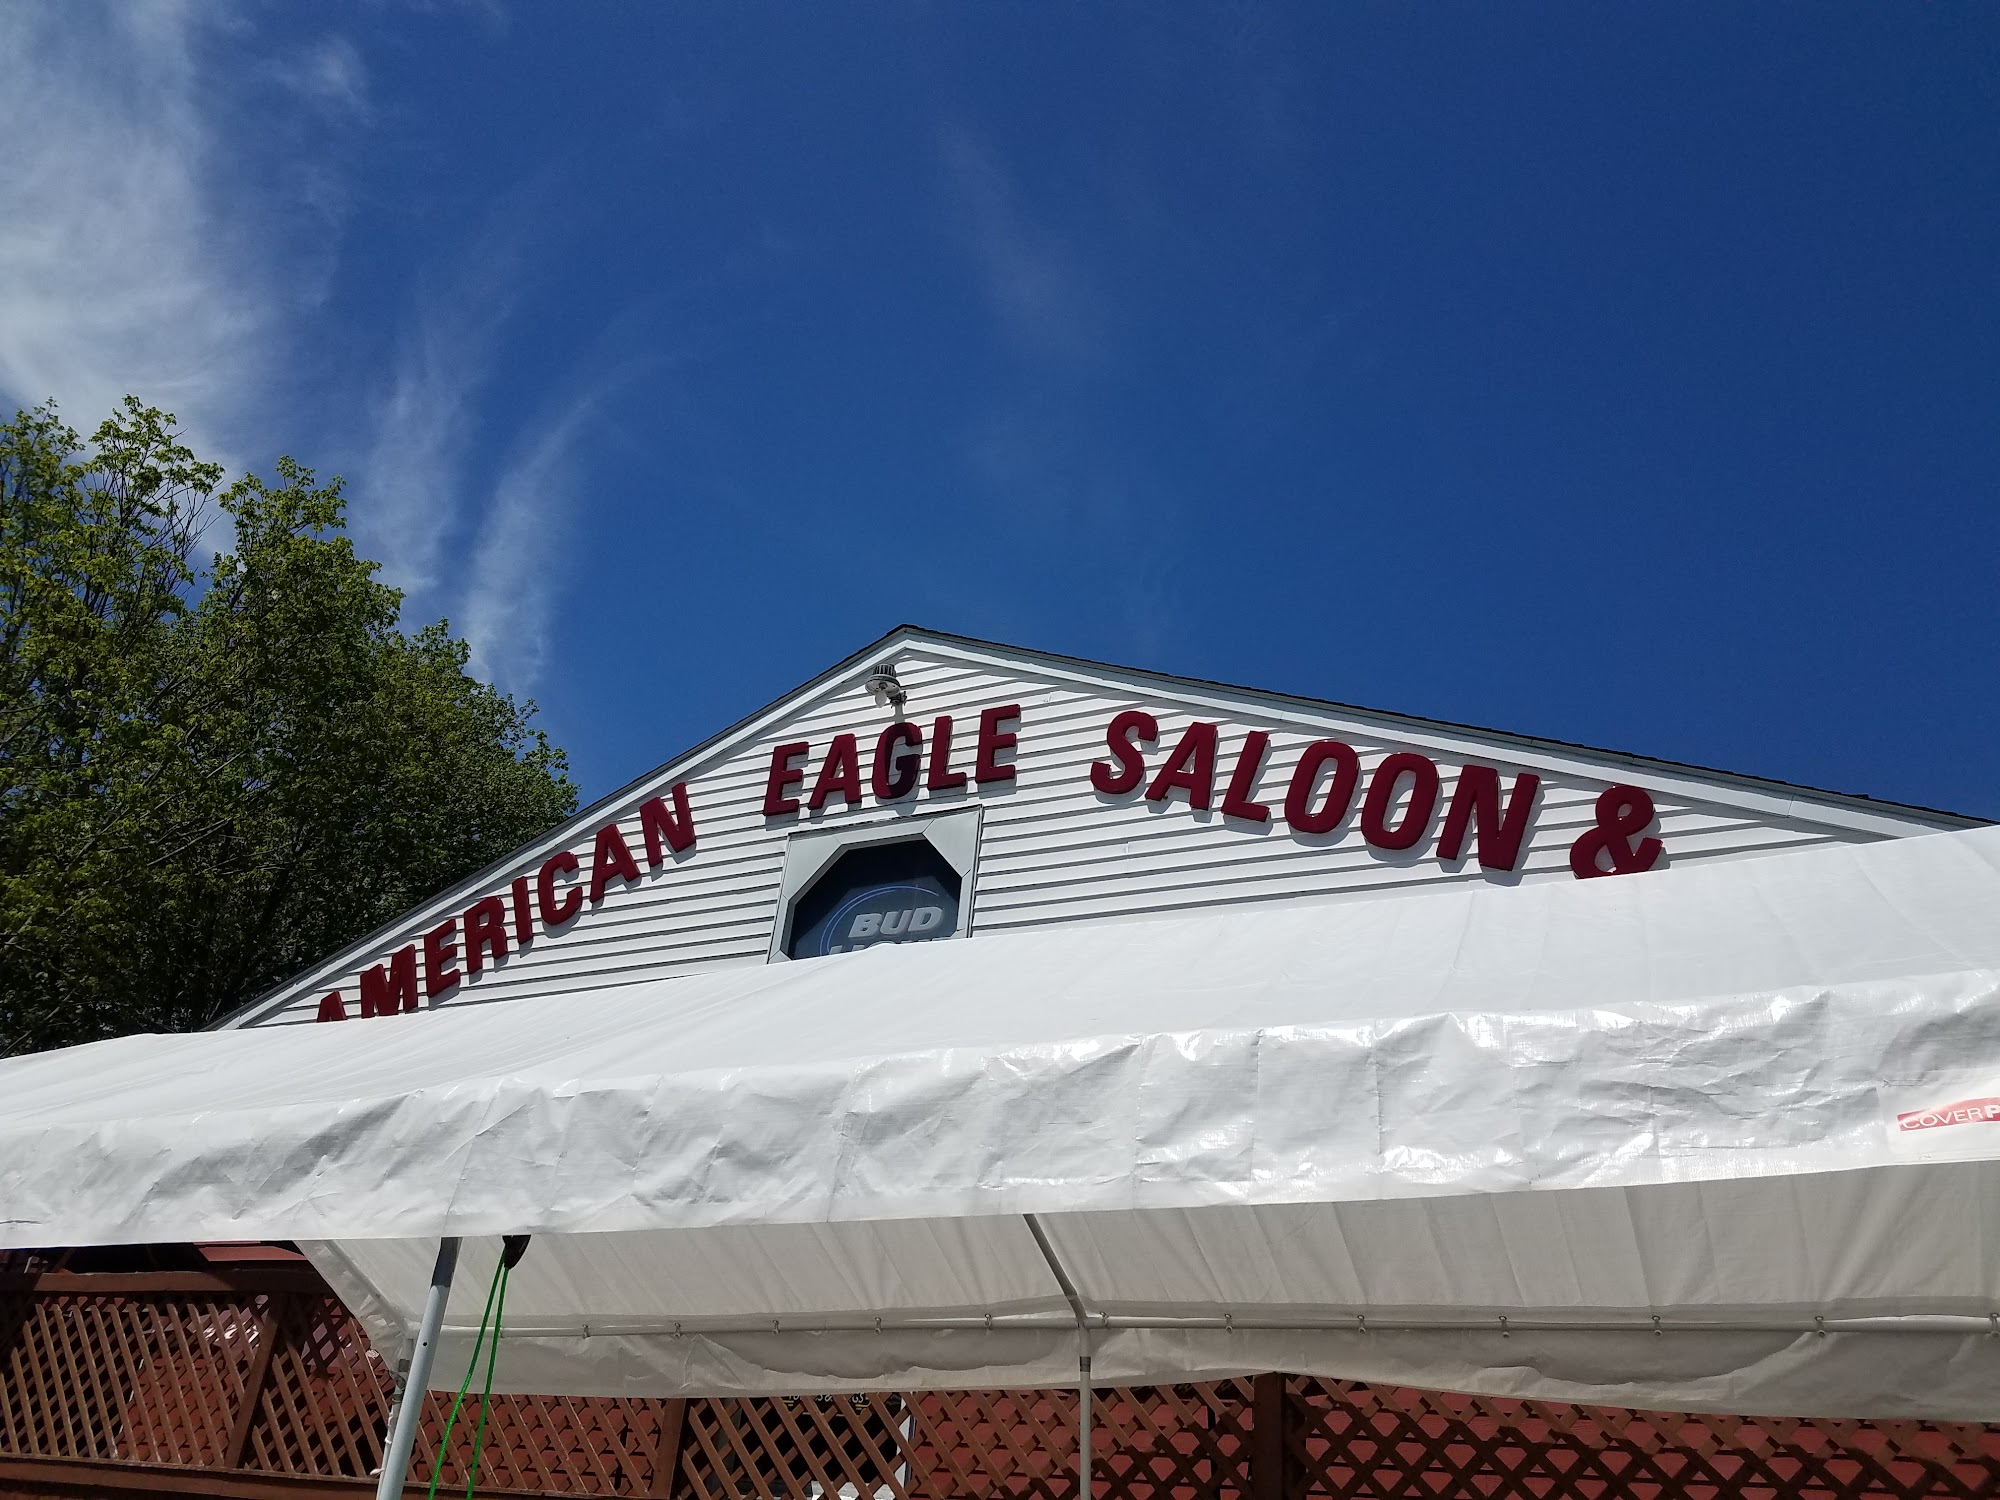 American Eagle Saloon